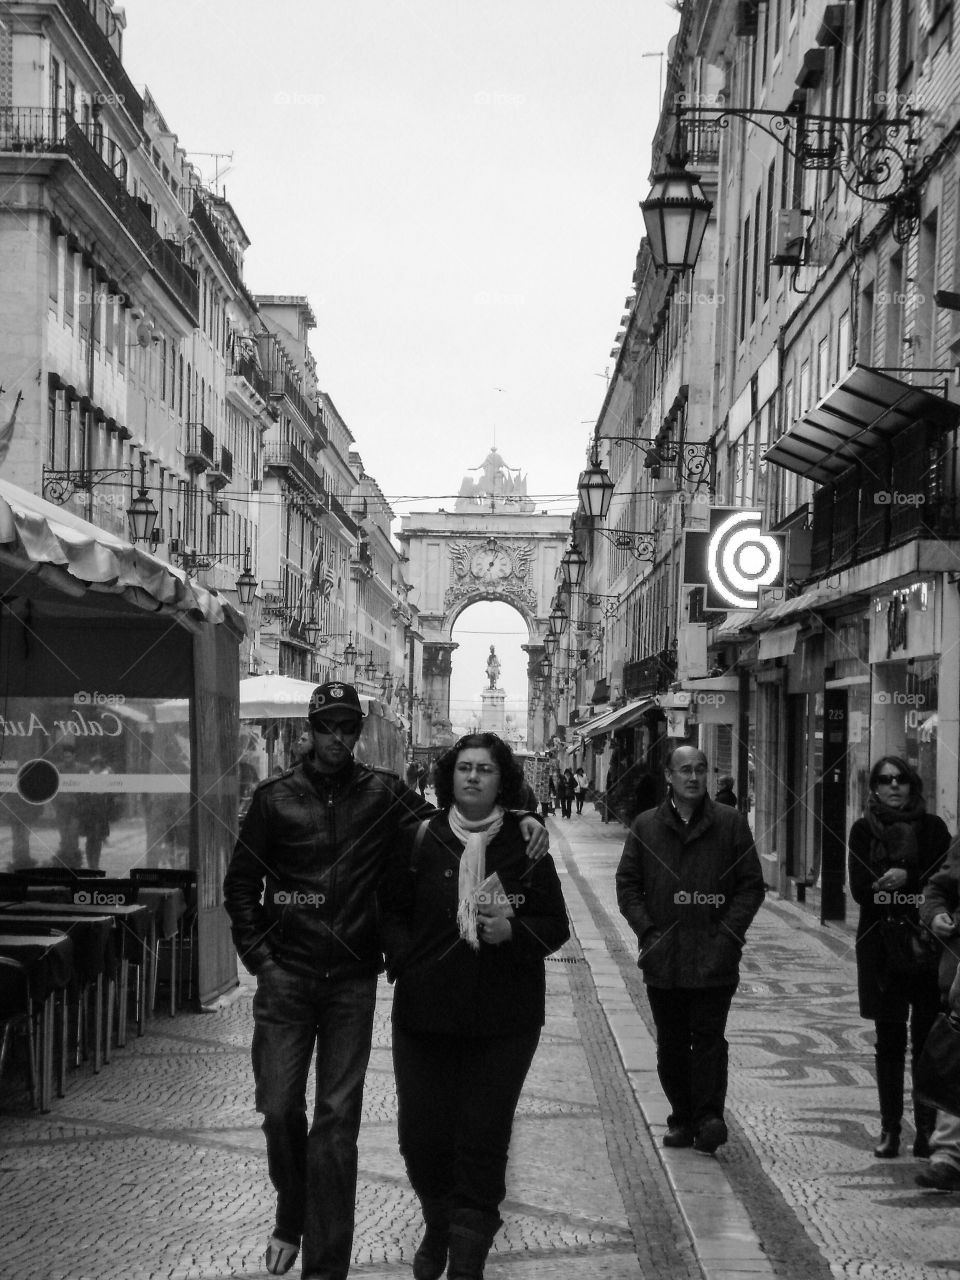 A Stroll in Lisbon